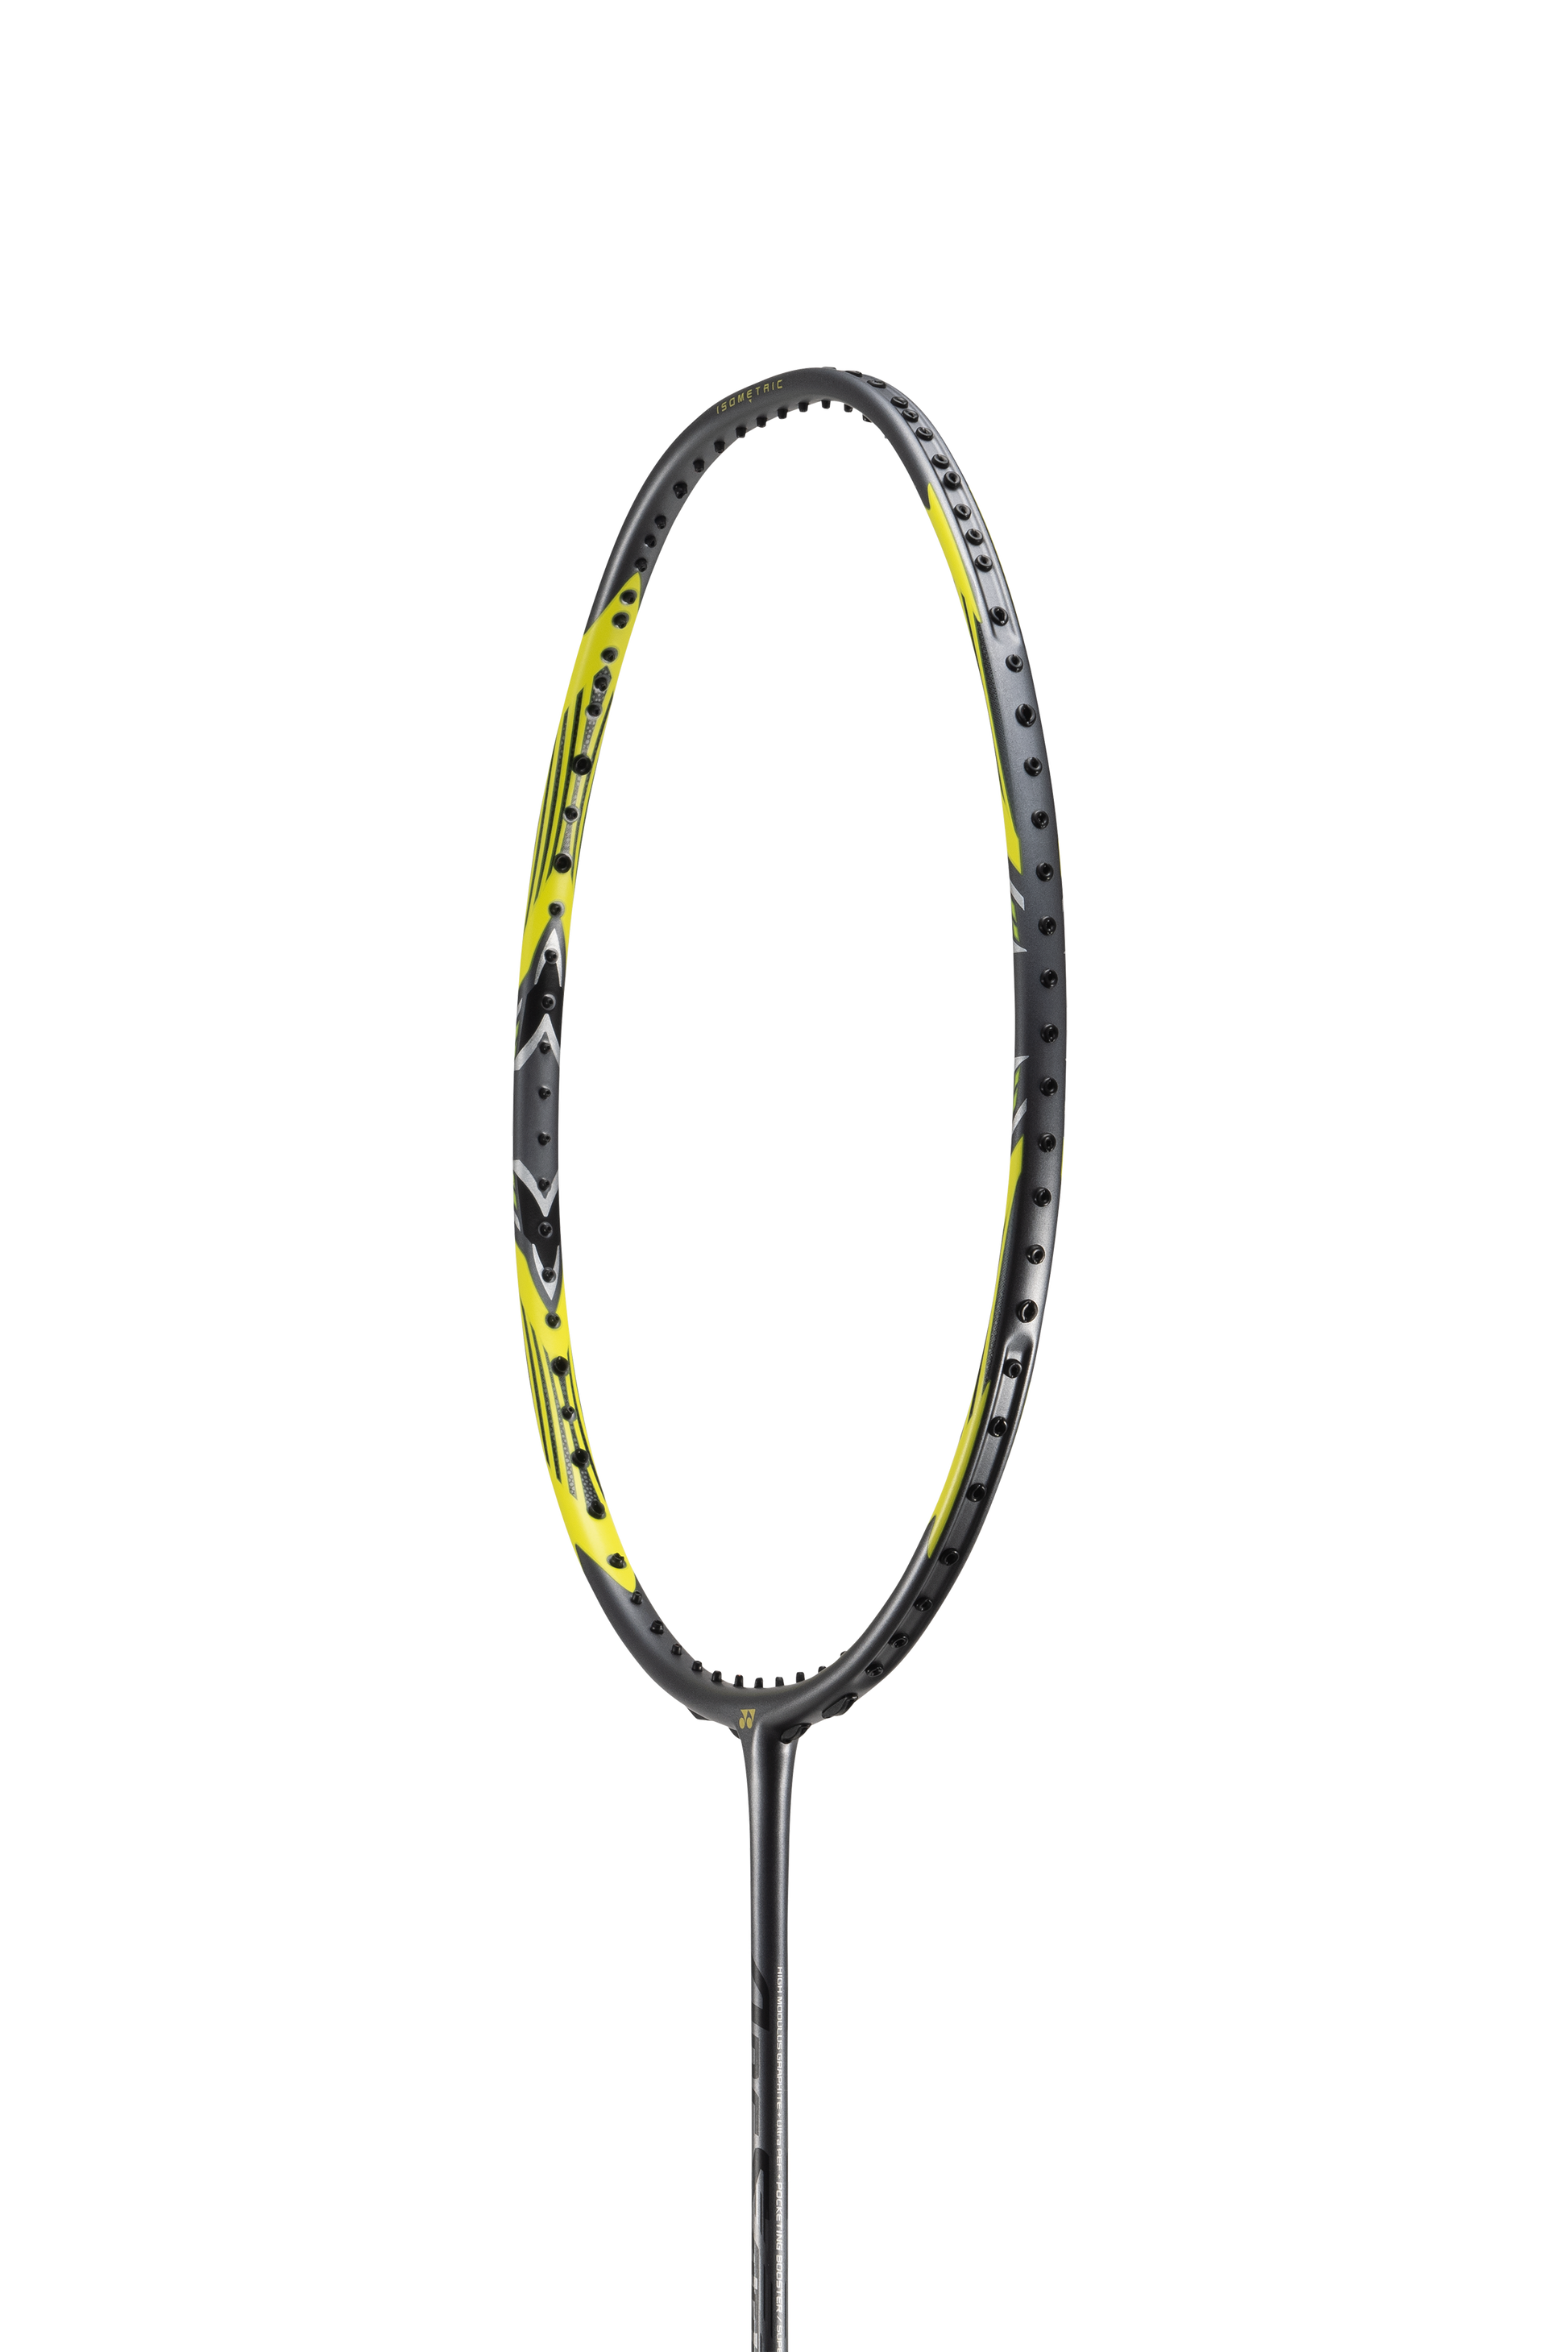 YONEX Badminton Racquet ARCSABER 7 PRO - Max Sports